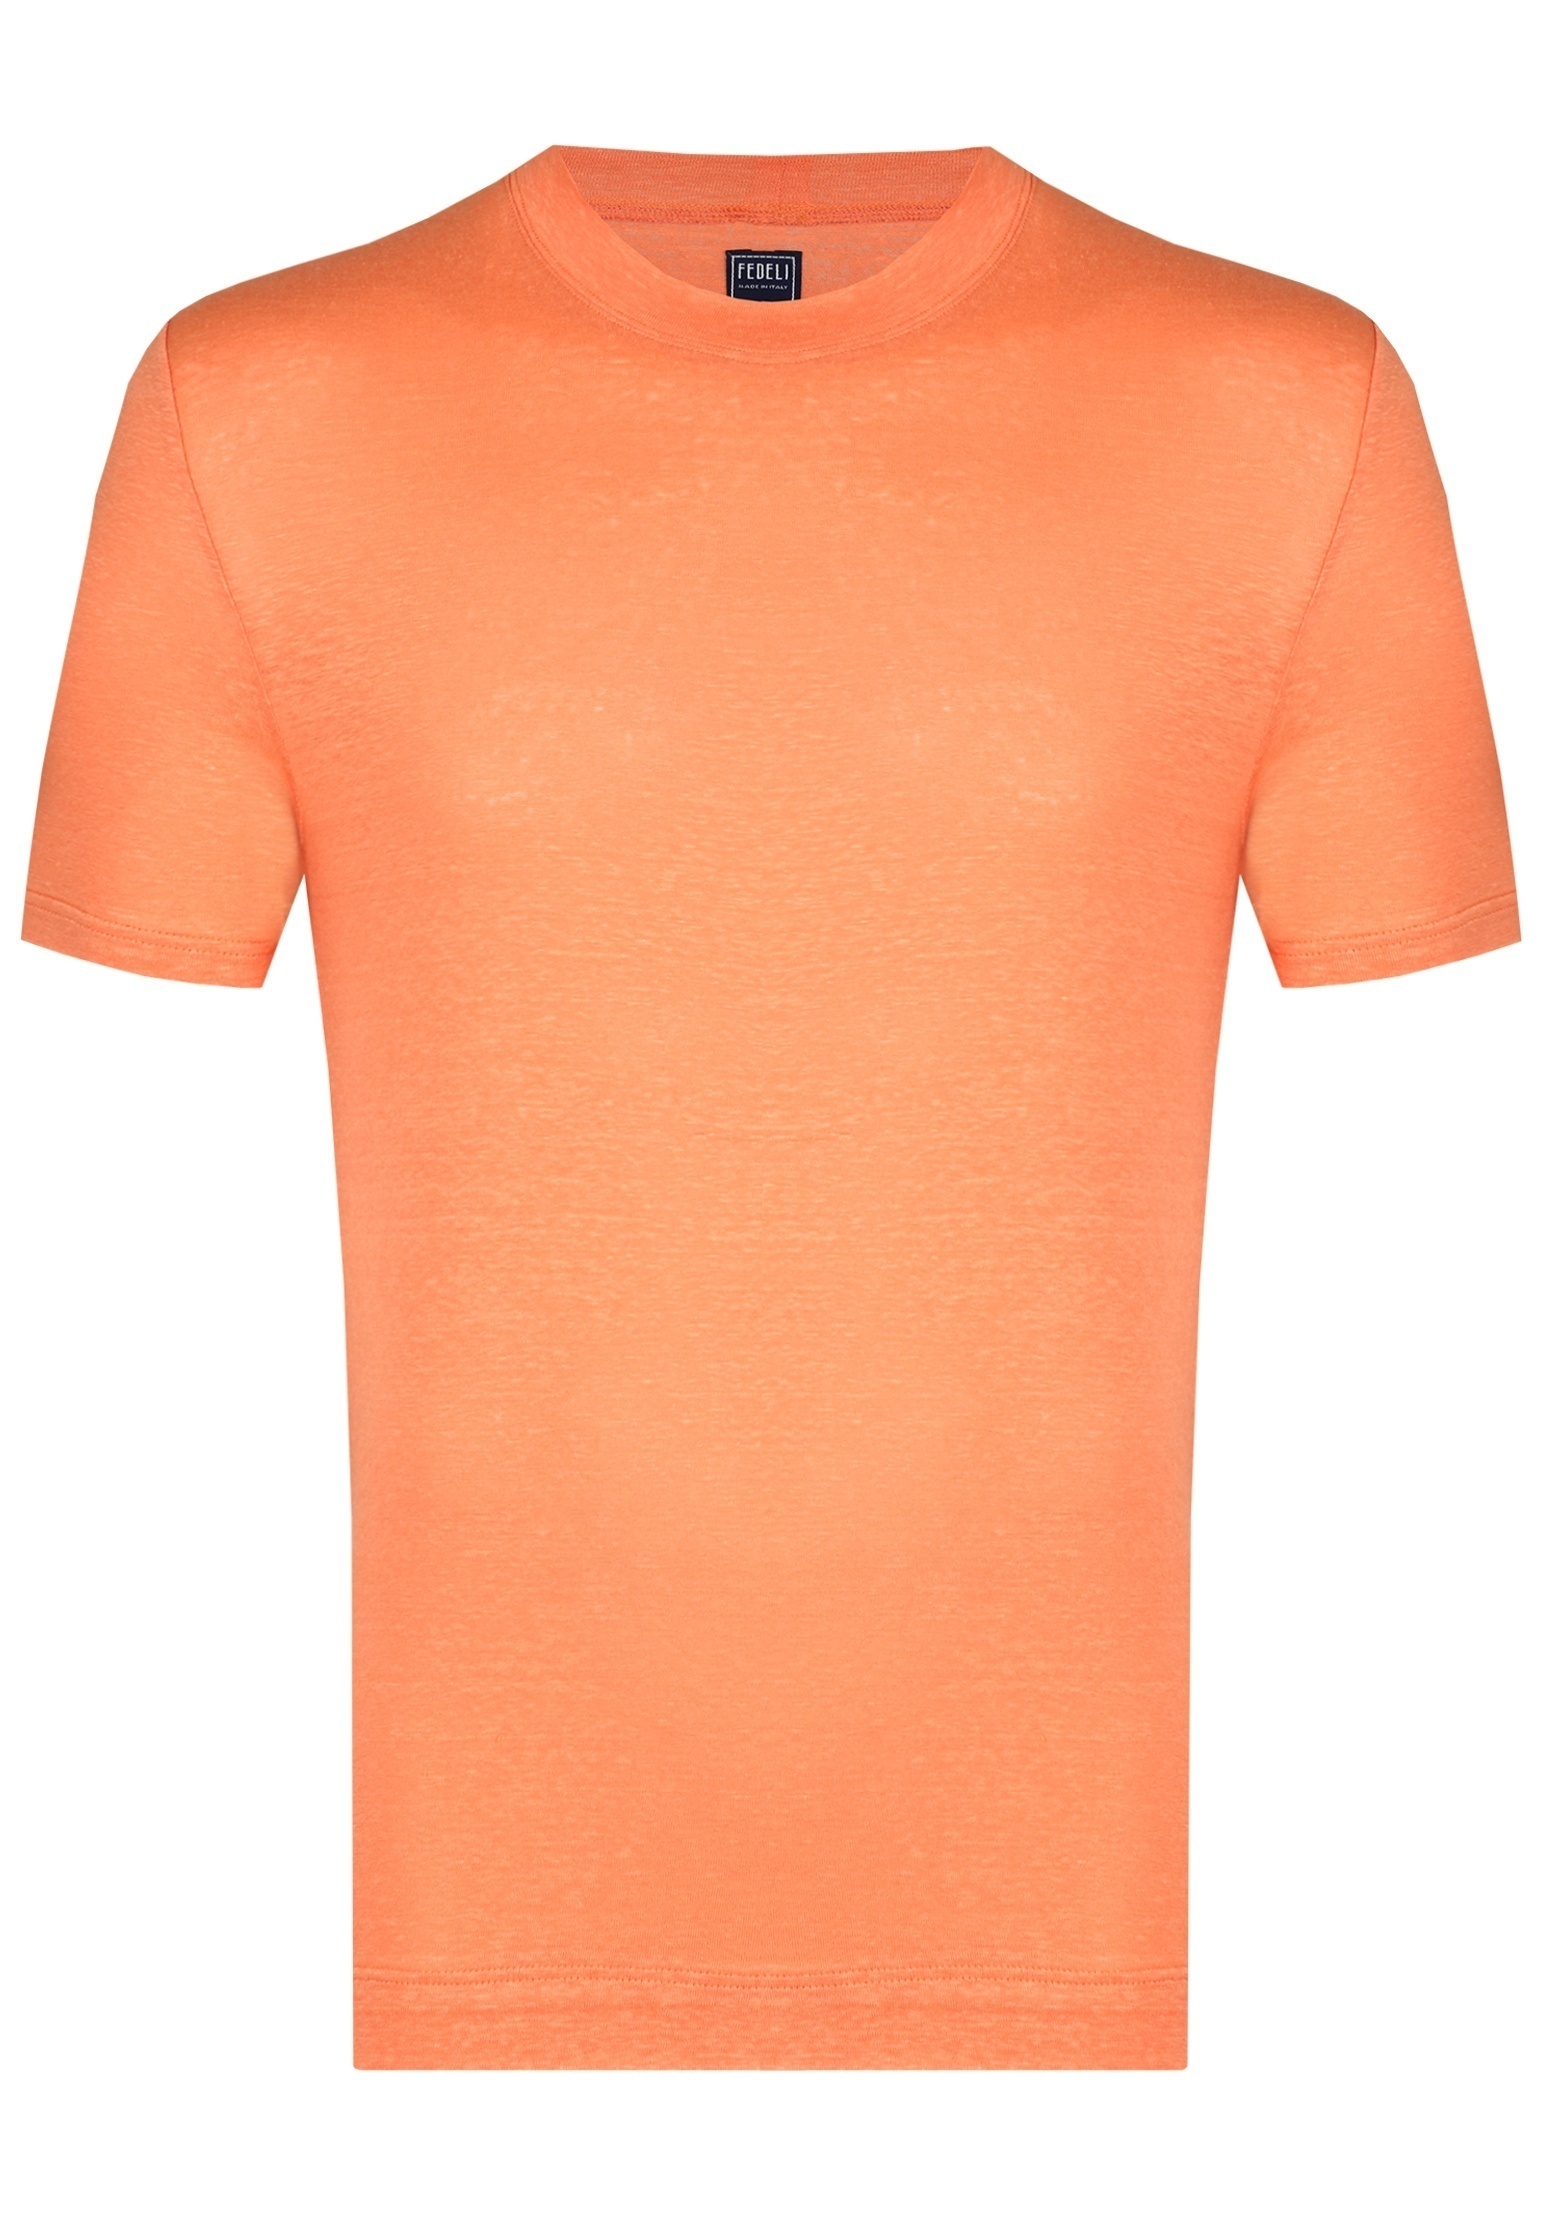 Футболка FEDELI Оранжевый, размер 48 137711 - фото 1